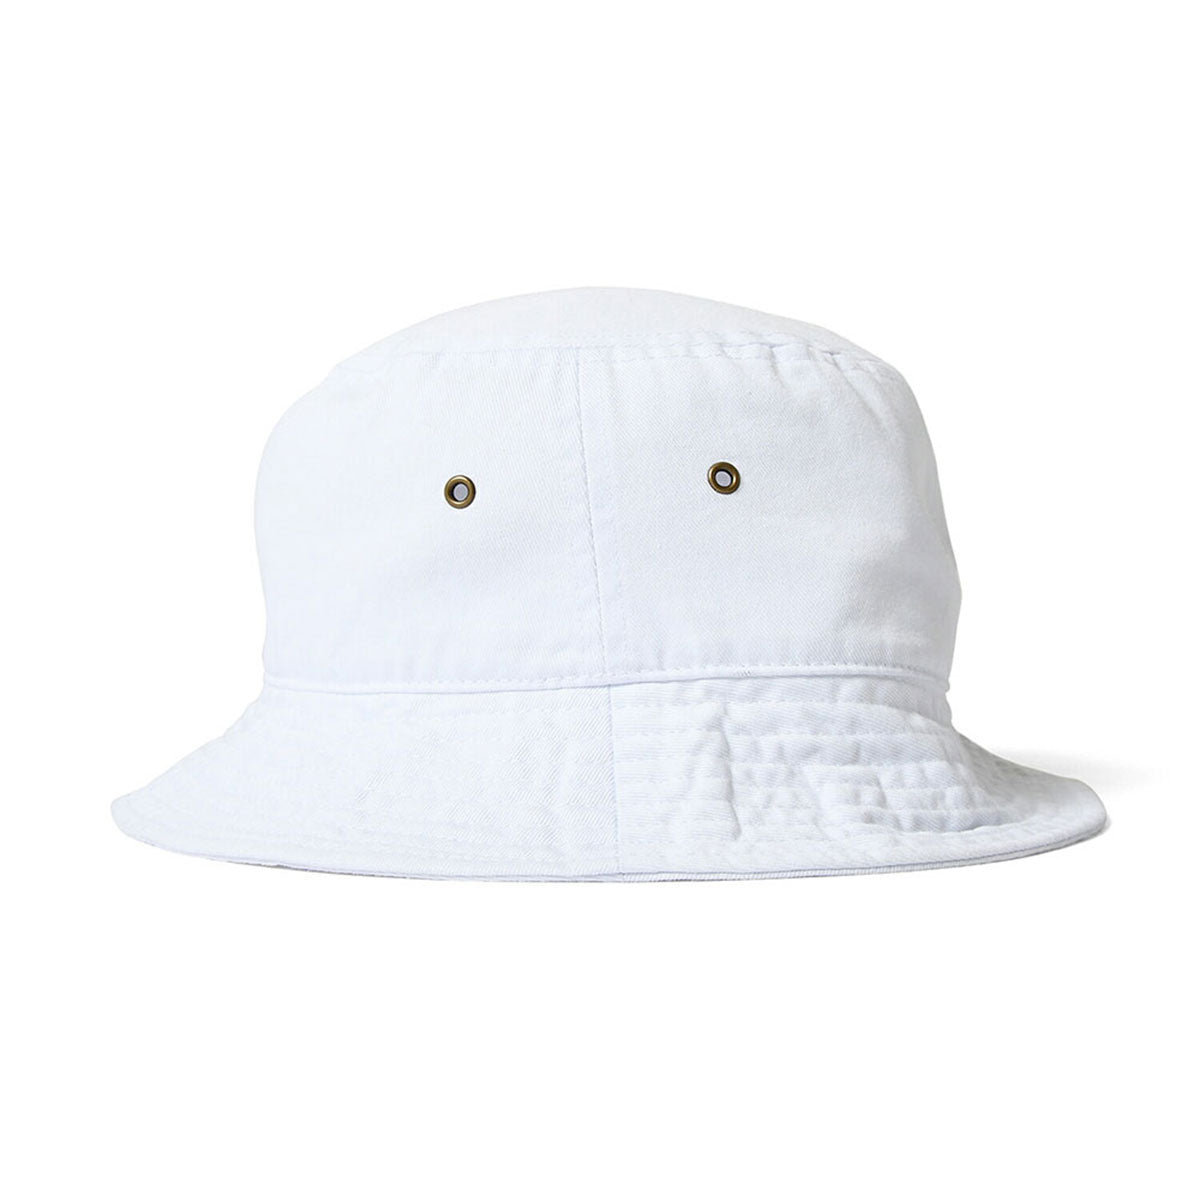 PABST BLUE RIBBON LOGO BUCKET HAT WHITE【PB211405】